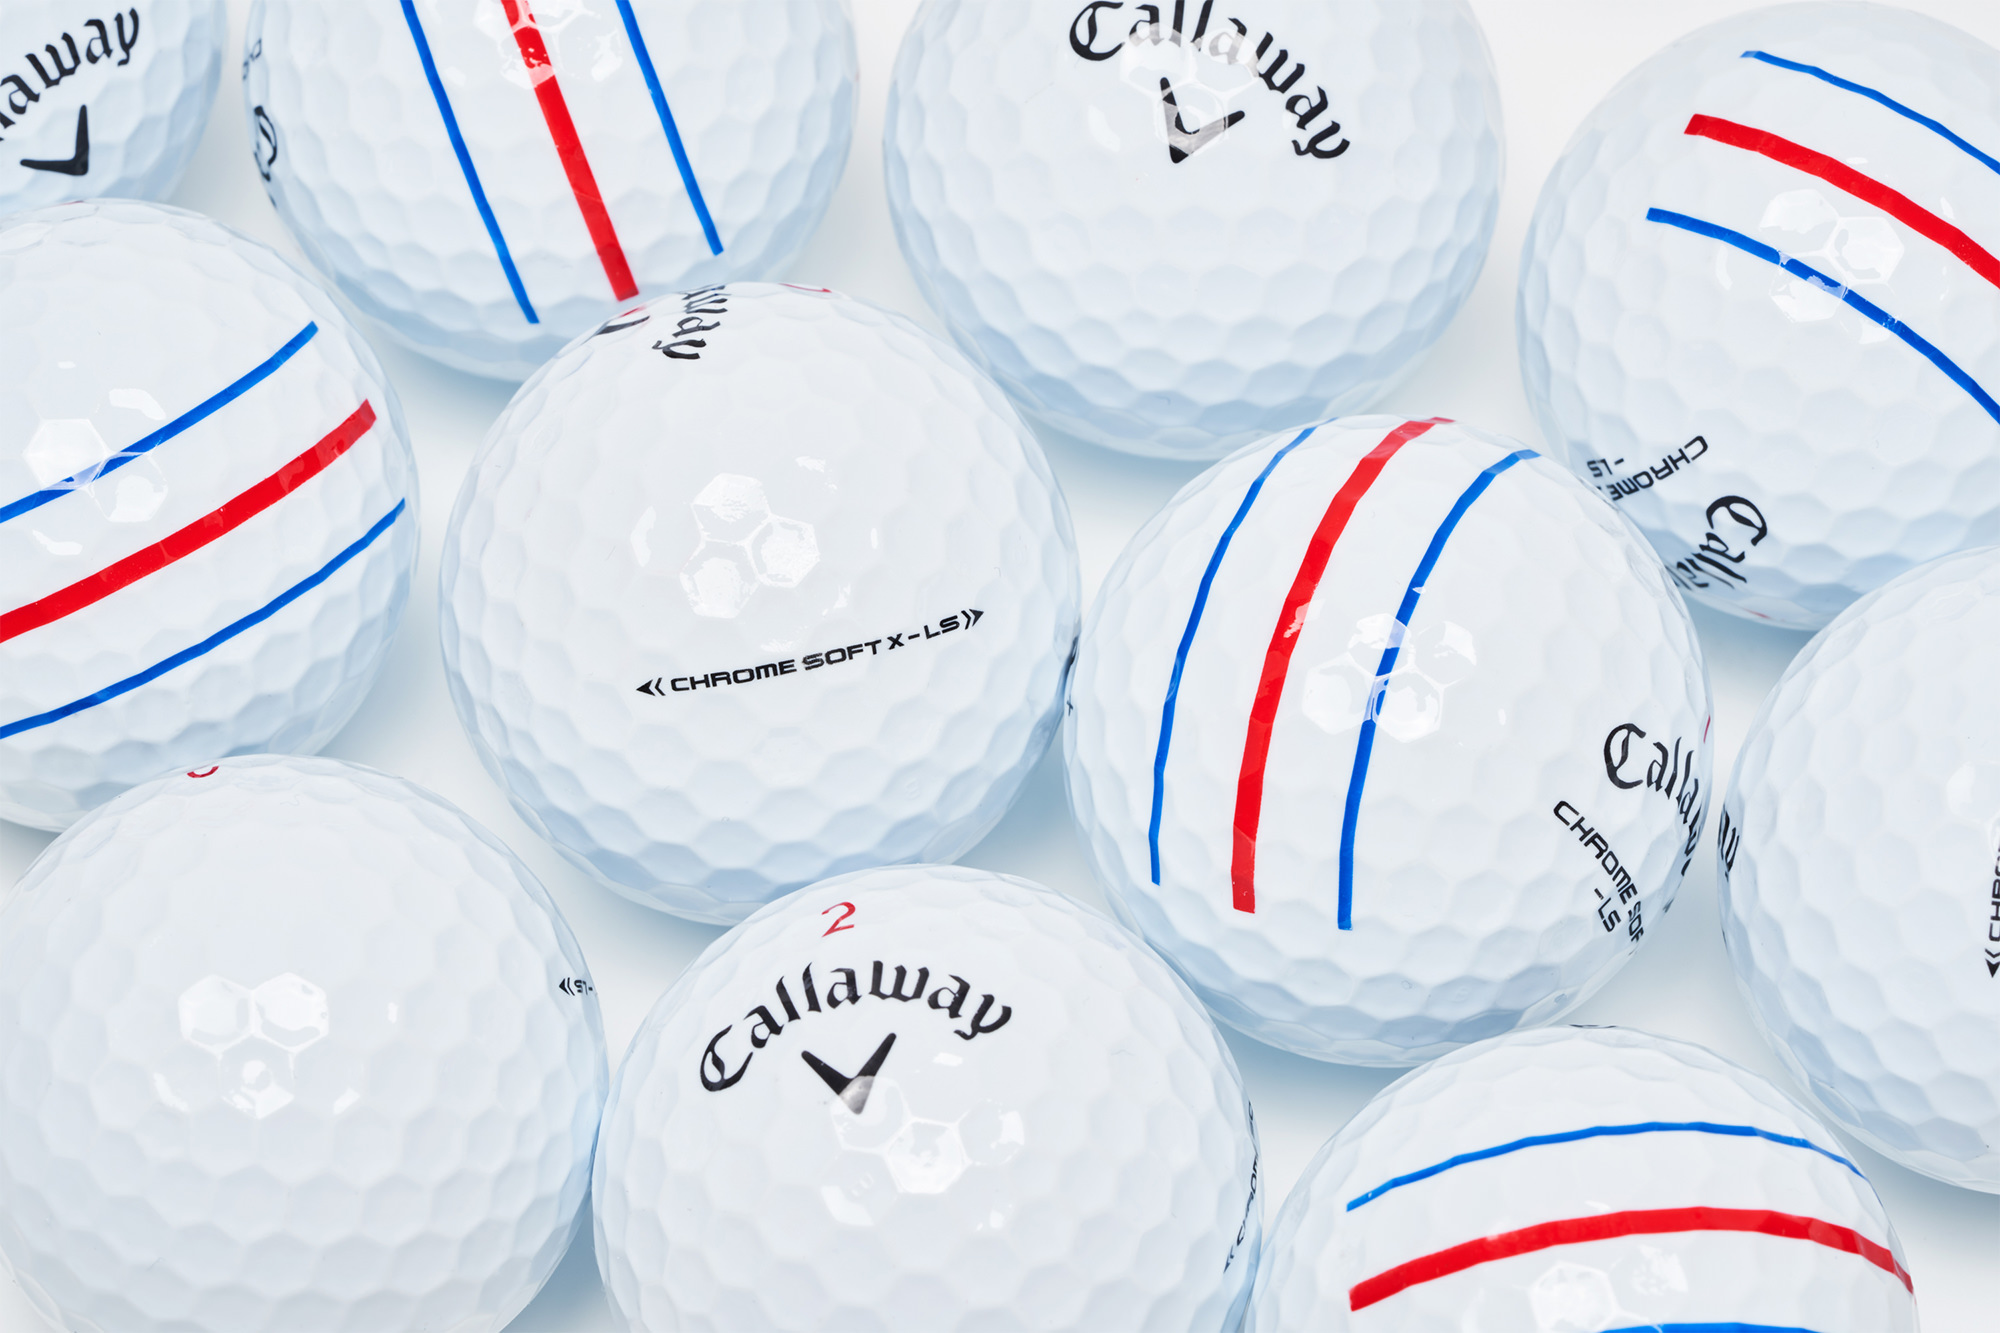 FIRST LOOK: Callaway Chrome Soft X LS golf balls - National Club Golfer